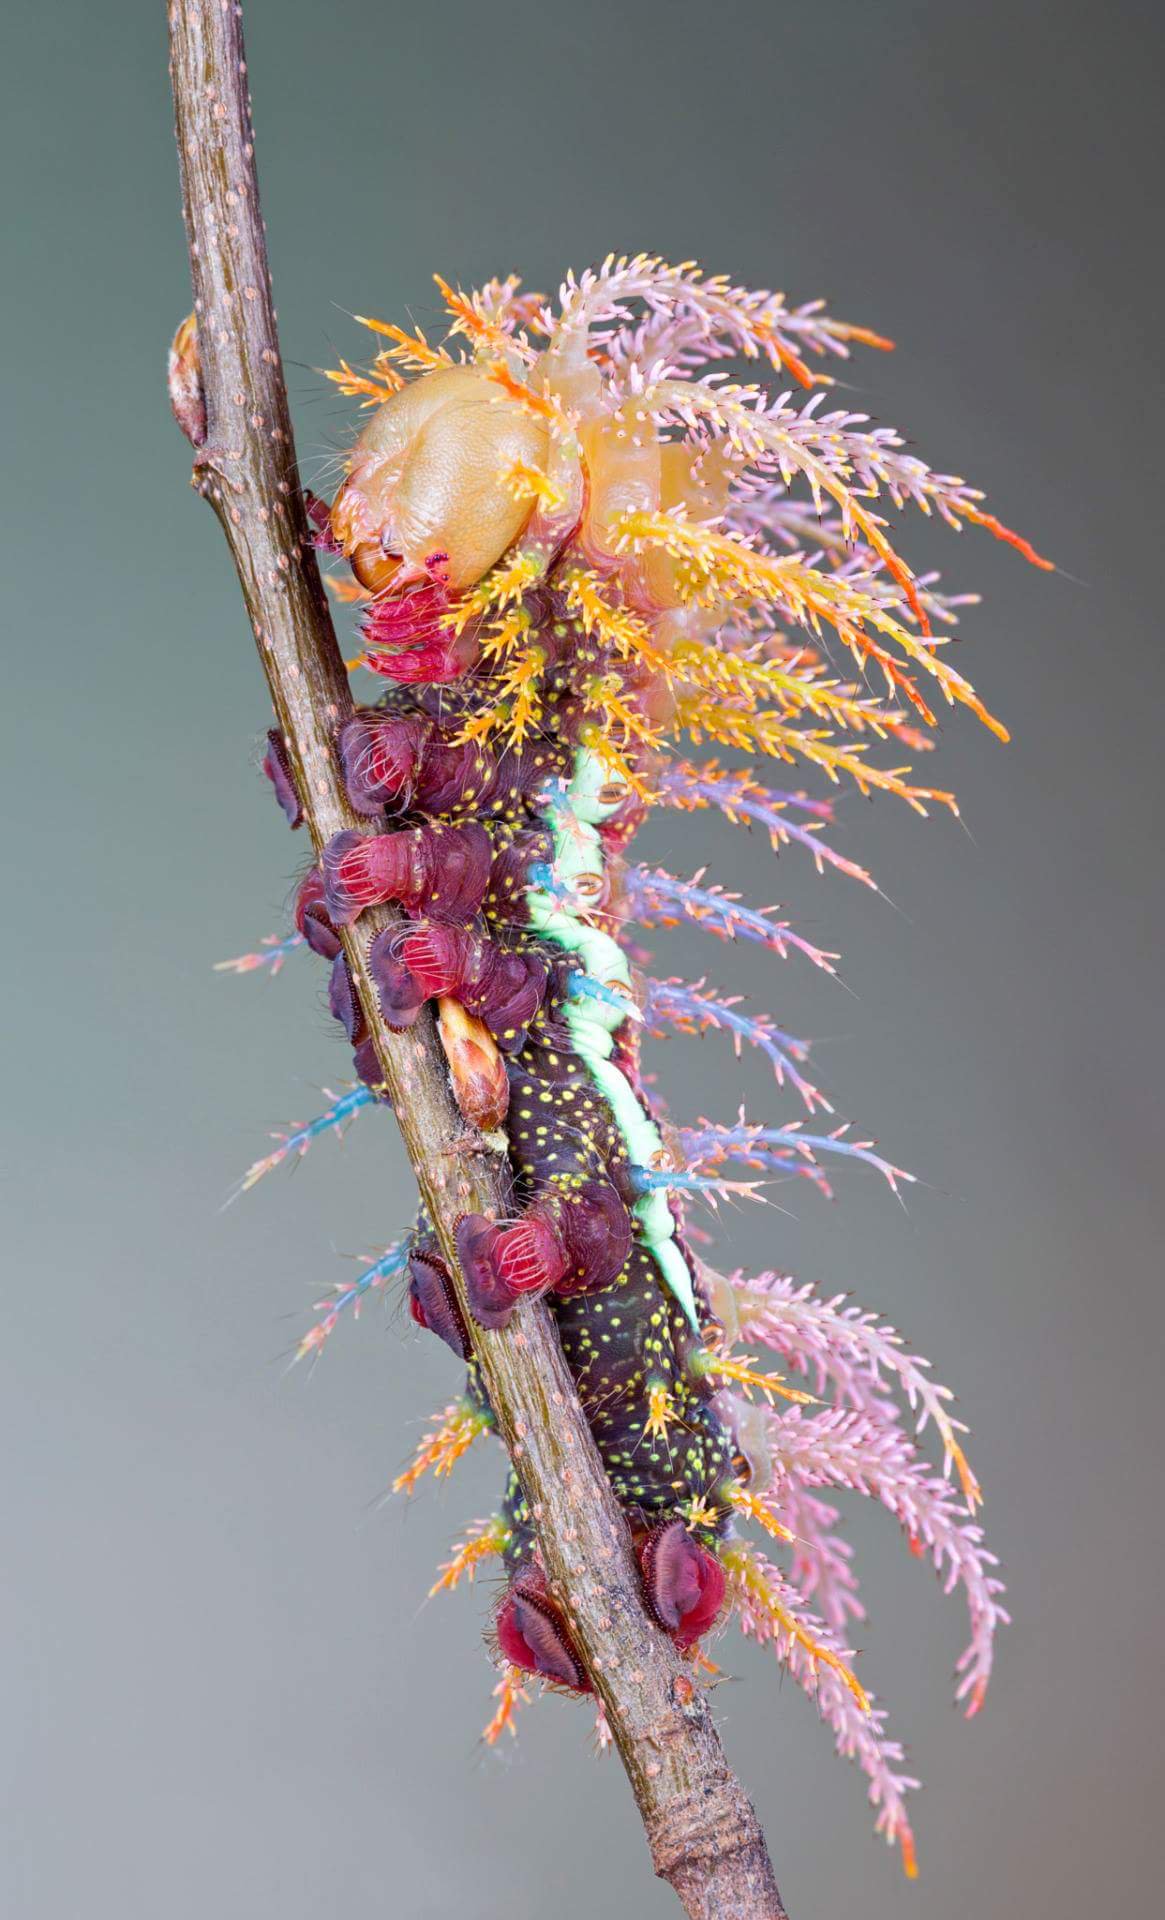 A Saturniidae moth’s caterpillar looks like a rare pokémon!